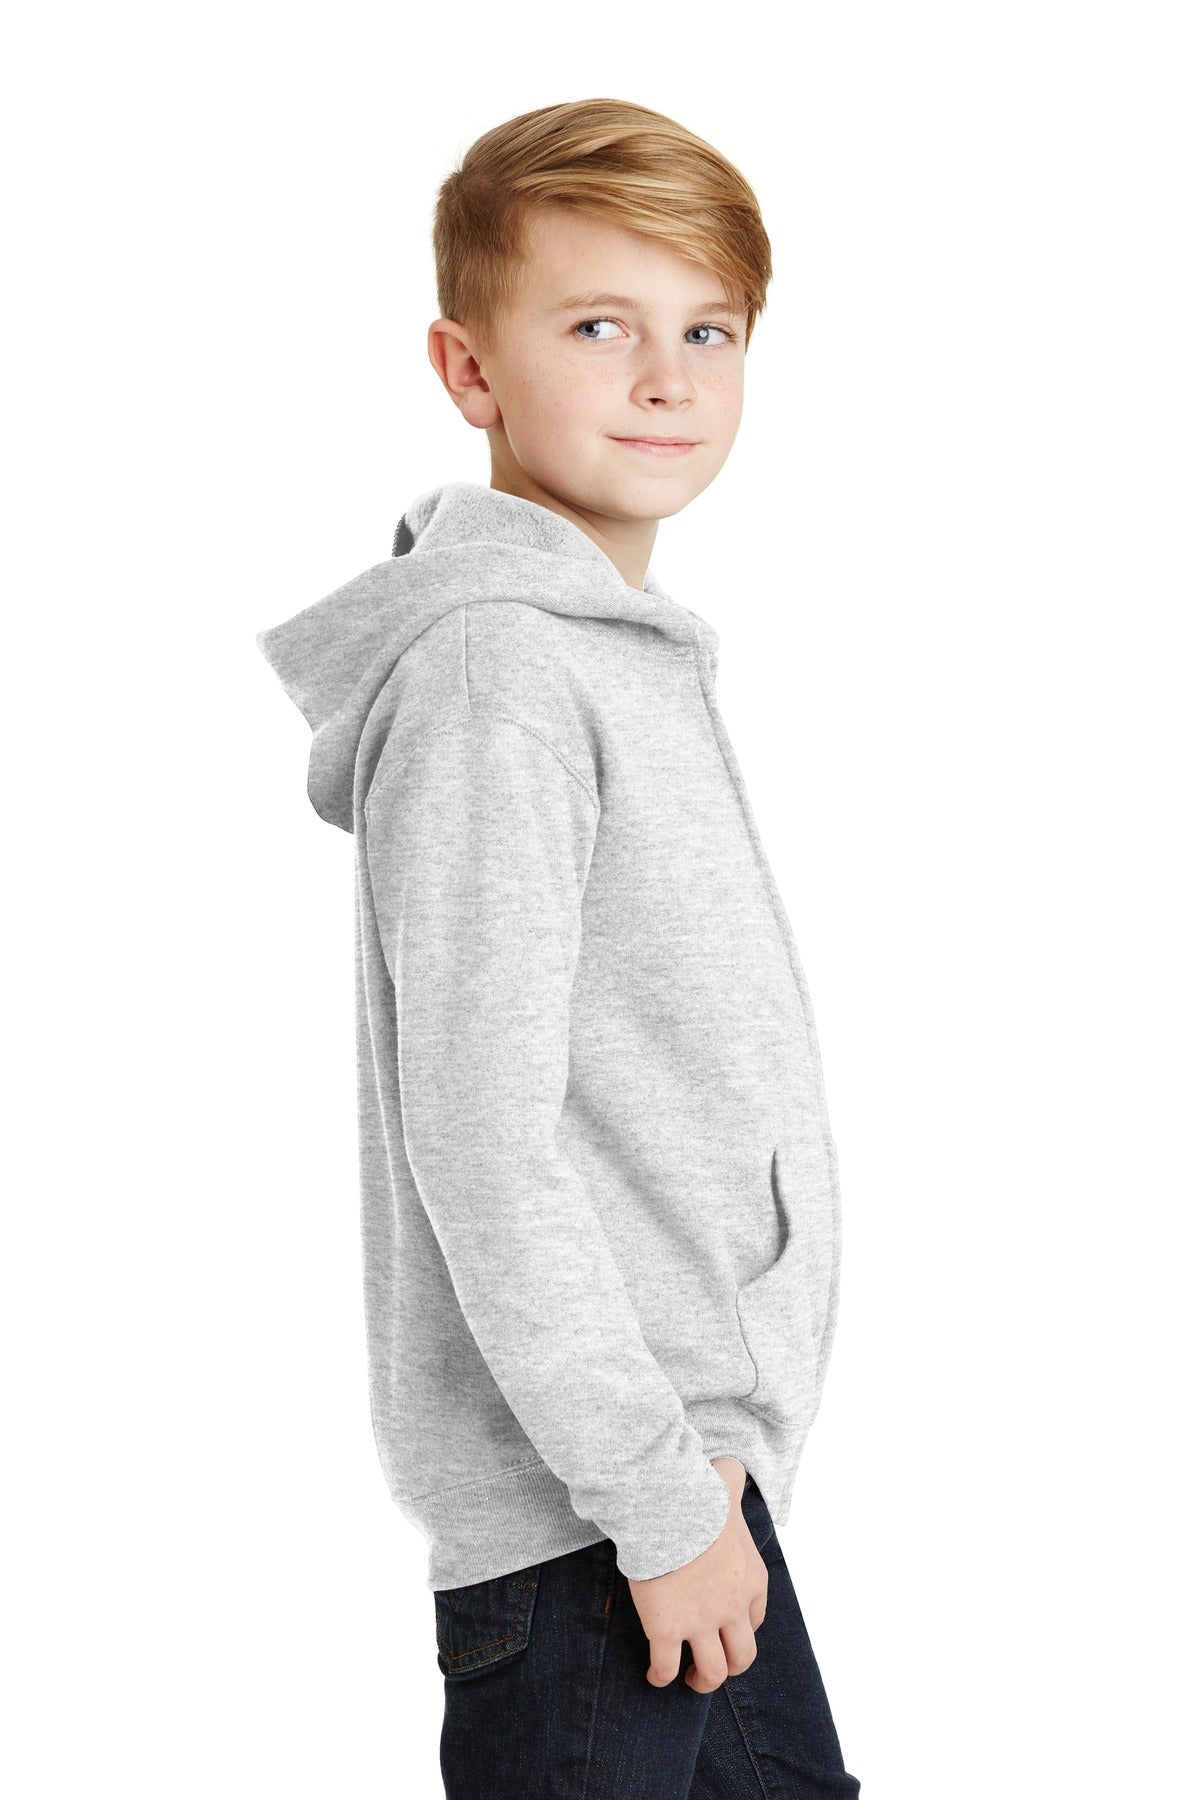 JERZEES® - Youth NuBlend® Full-Zip Hooded Sweatshirt. 993B - DFW Impression